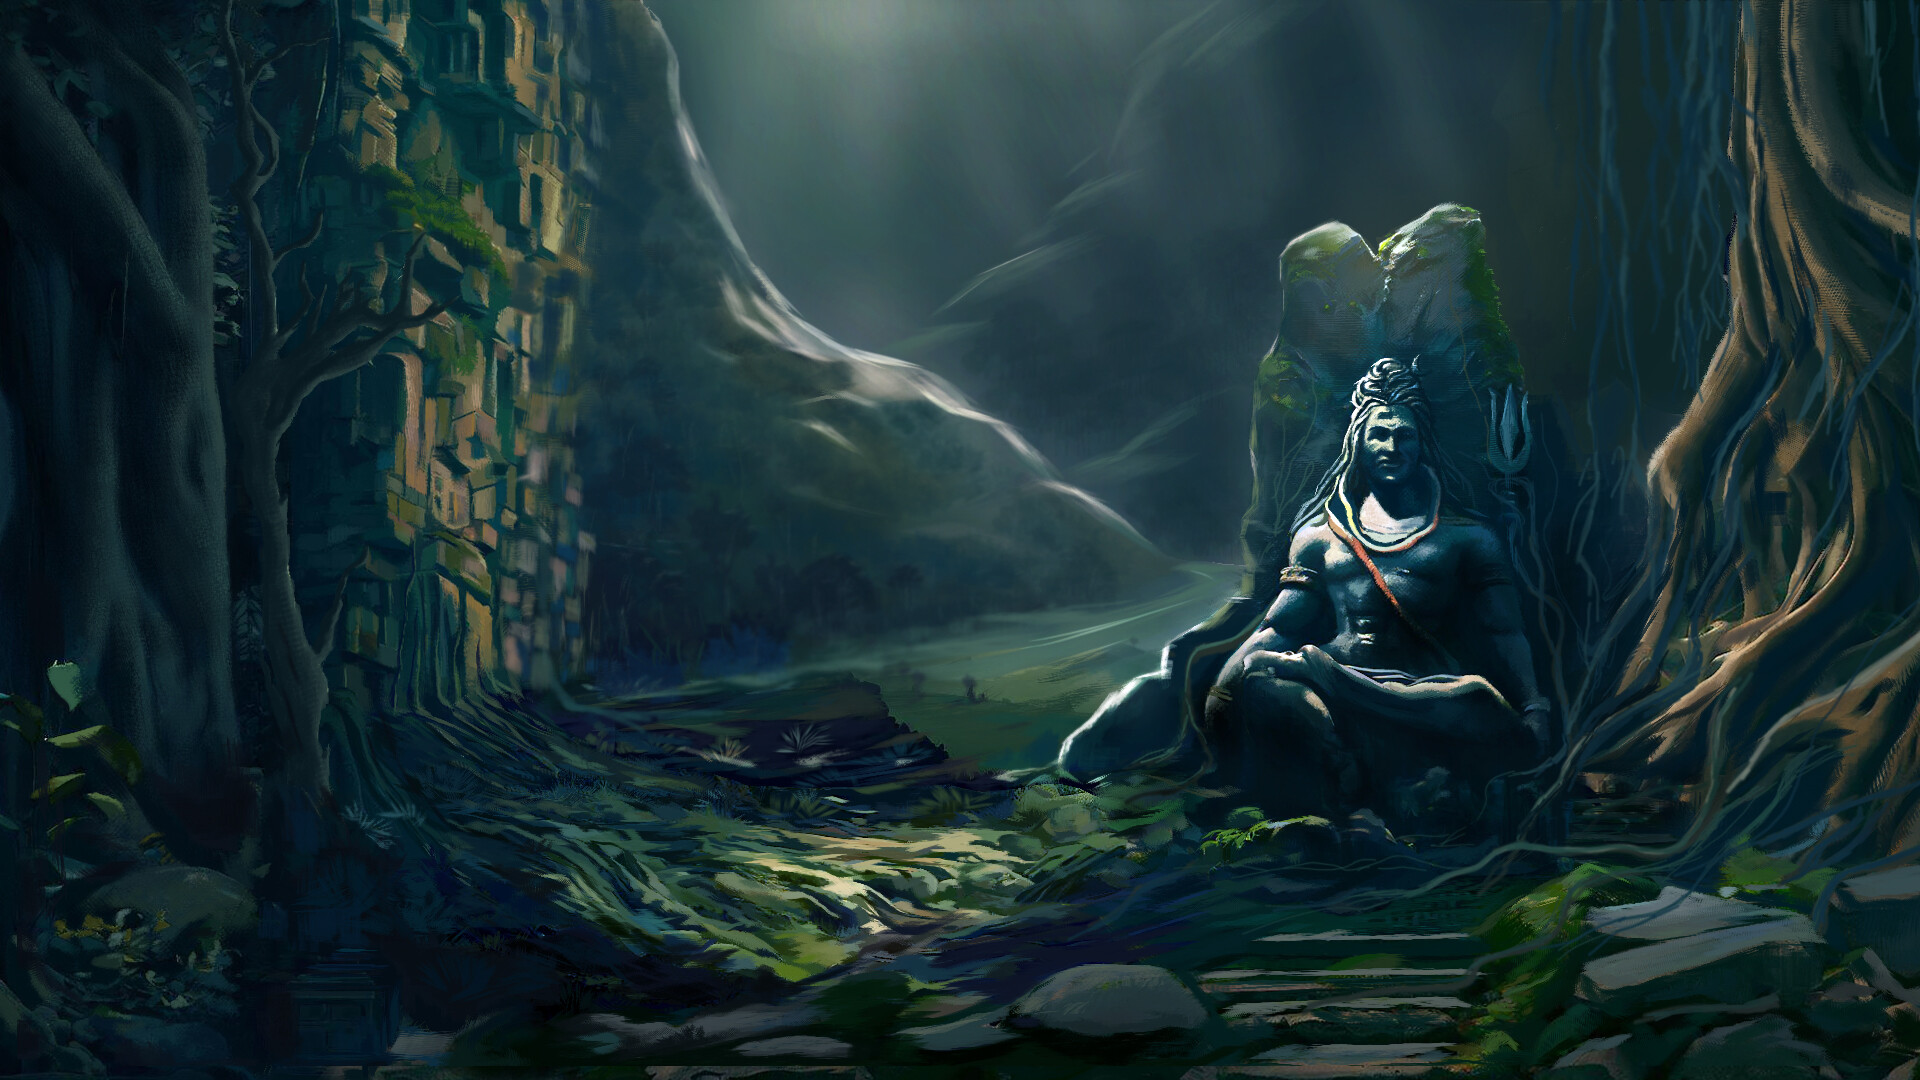 ArtStation - Lord Shiva in the Dark Forest.